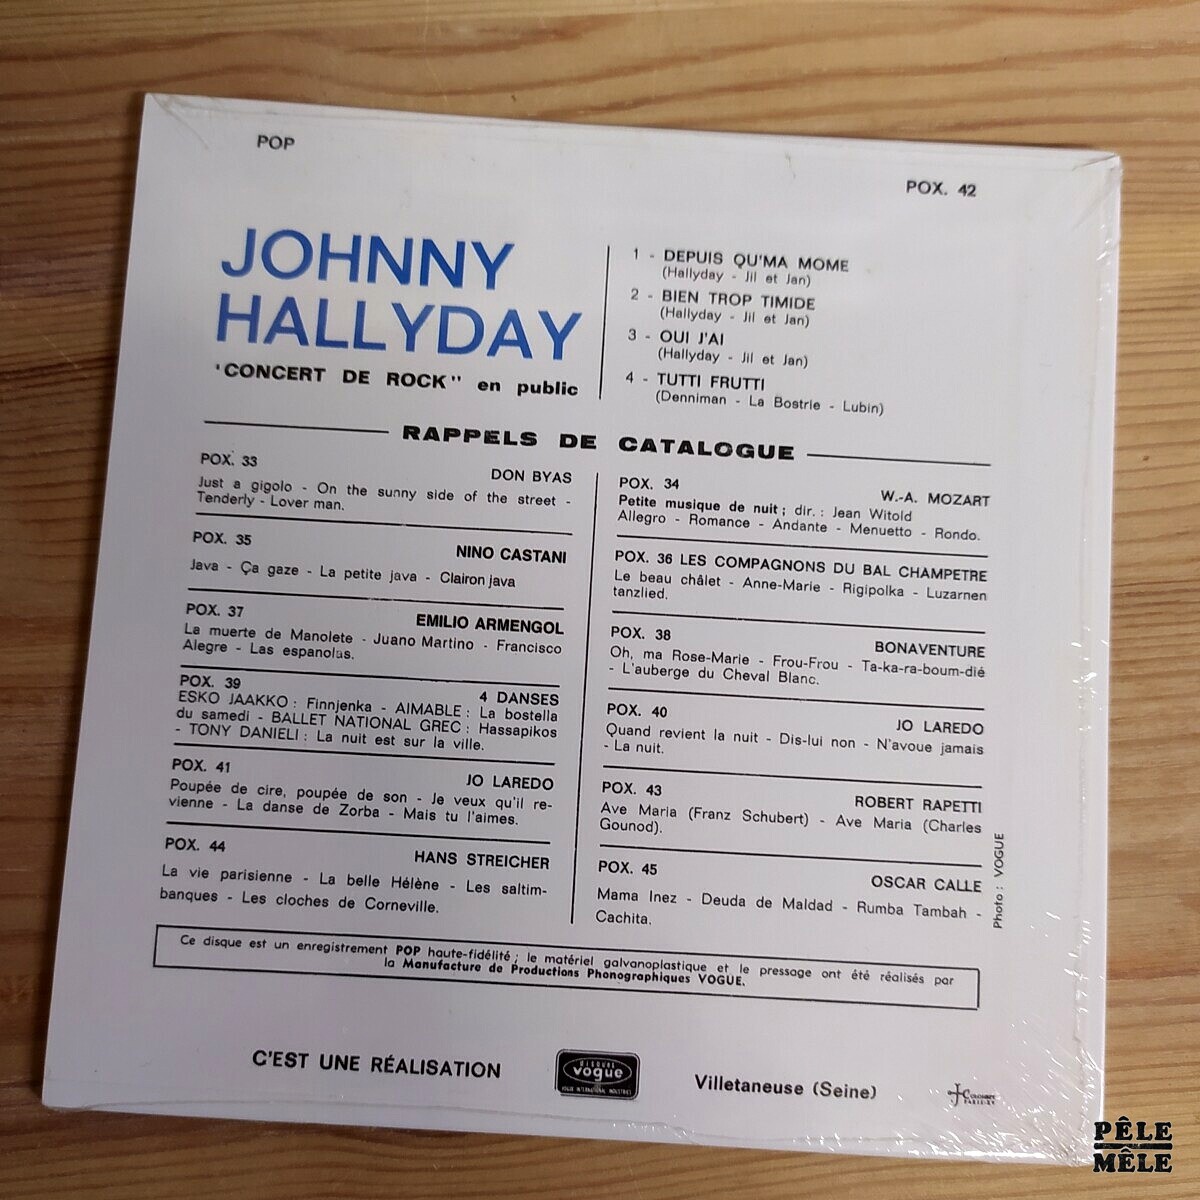 Johnny Hallyday Concert de Rock en Public (VOGUE) CD MINI